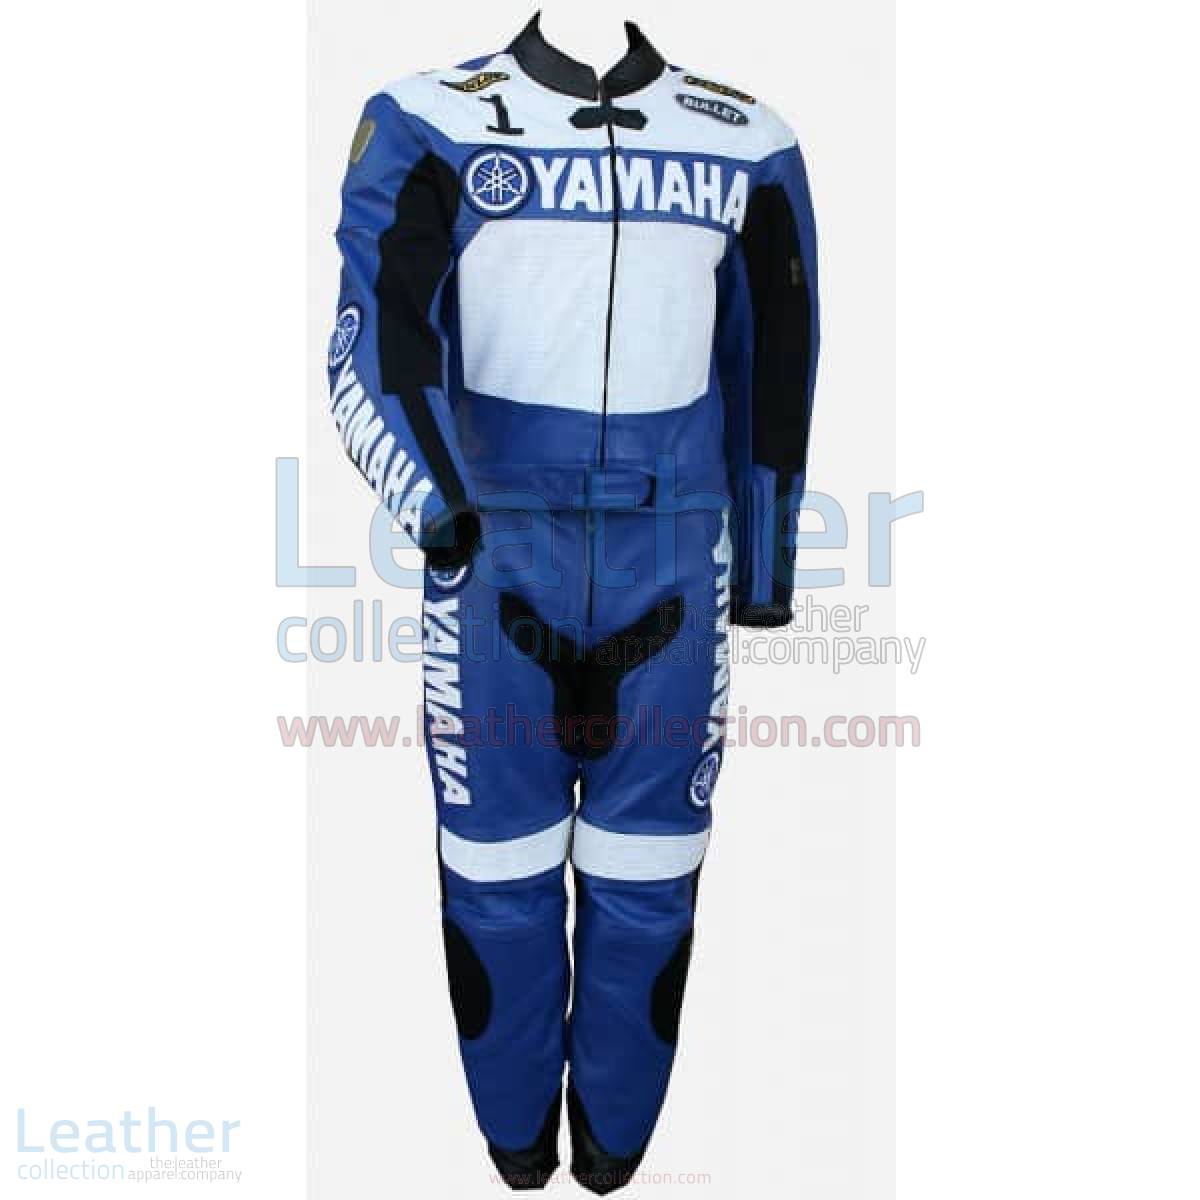 Yamaha Racing Leather Suit Blue/White